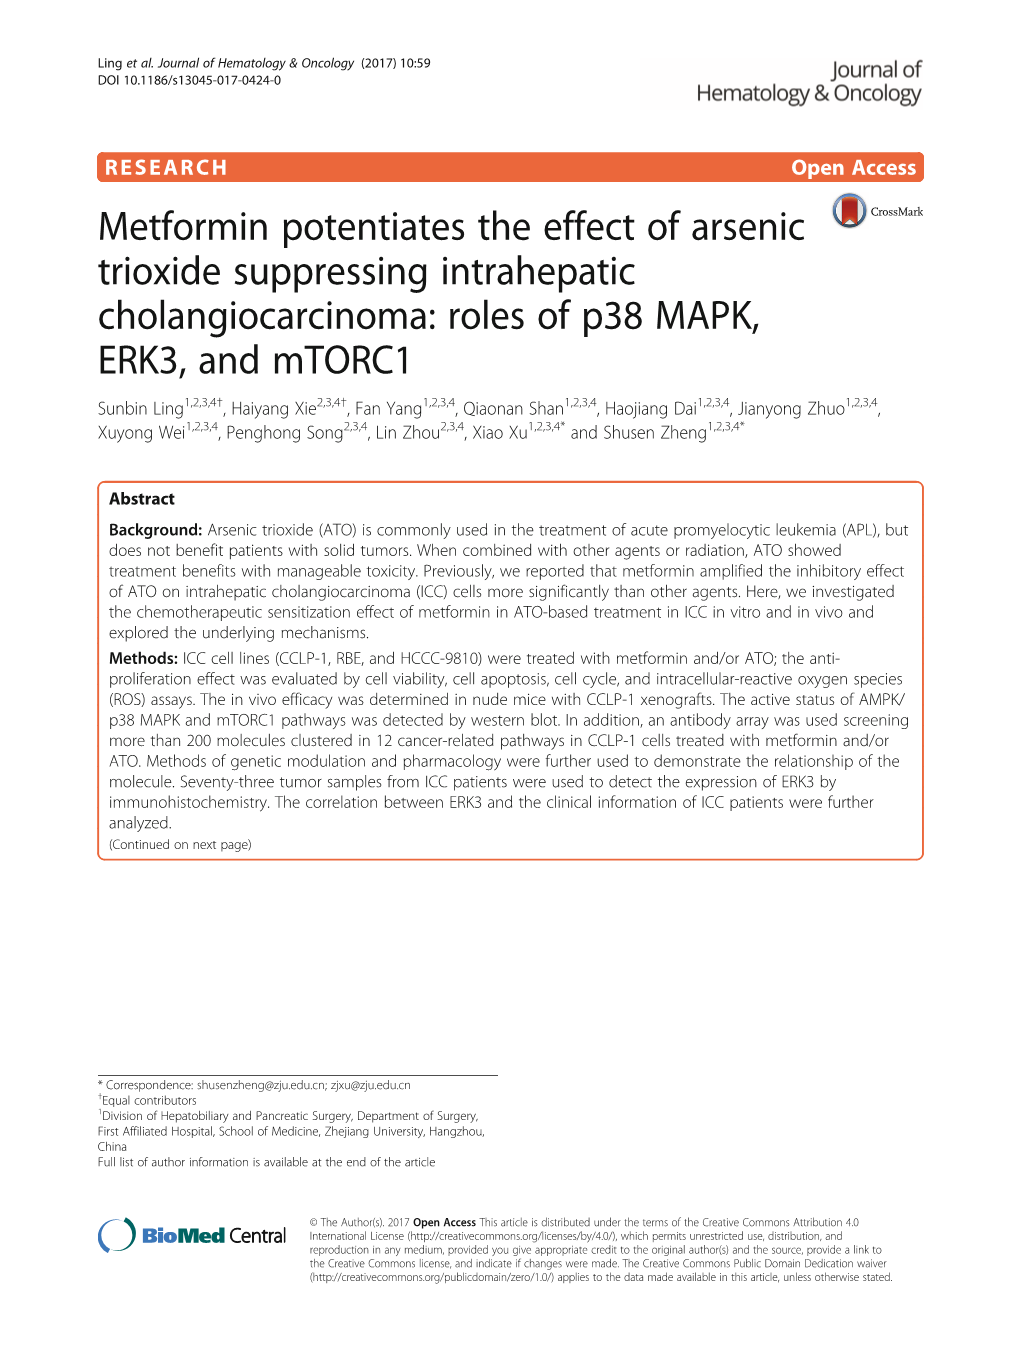 Metformin Potentiates the Effect Of